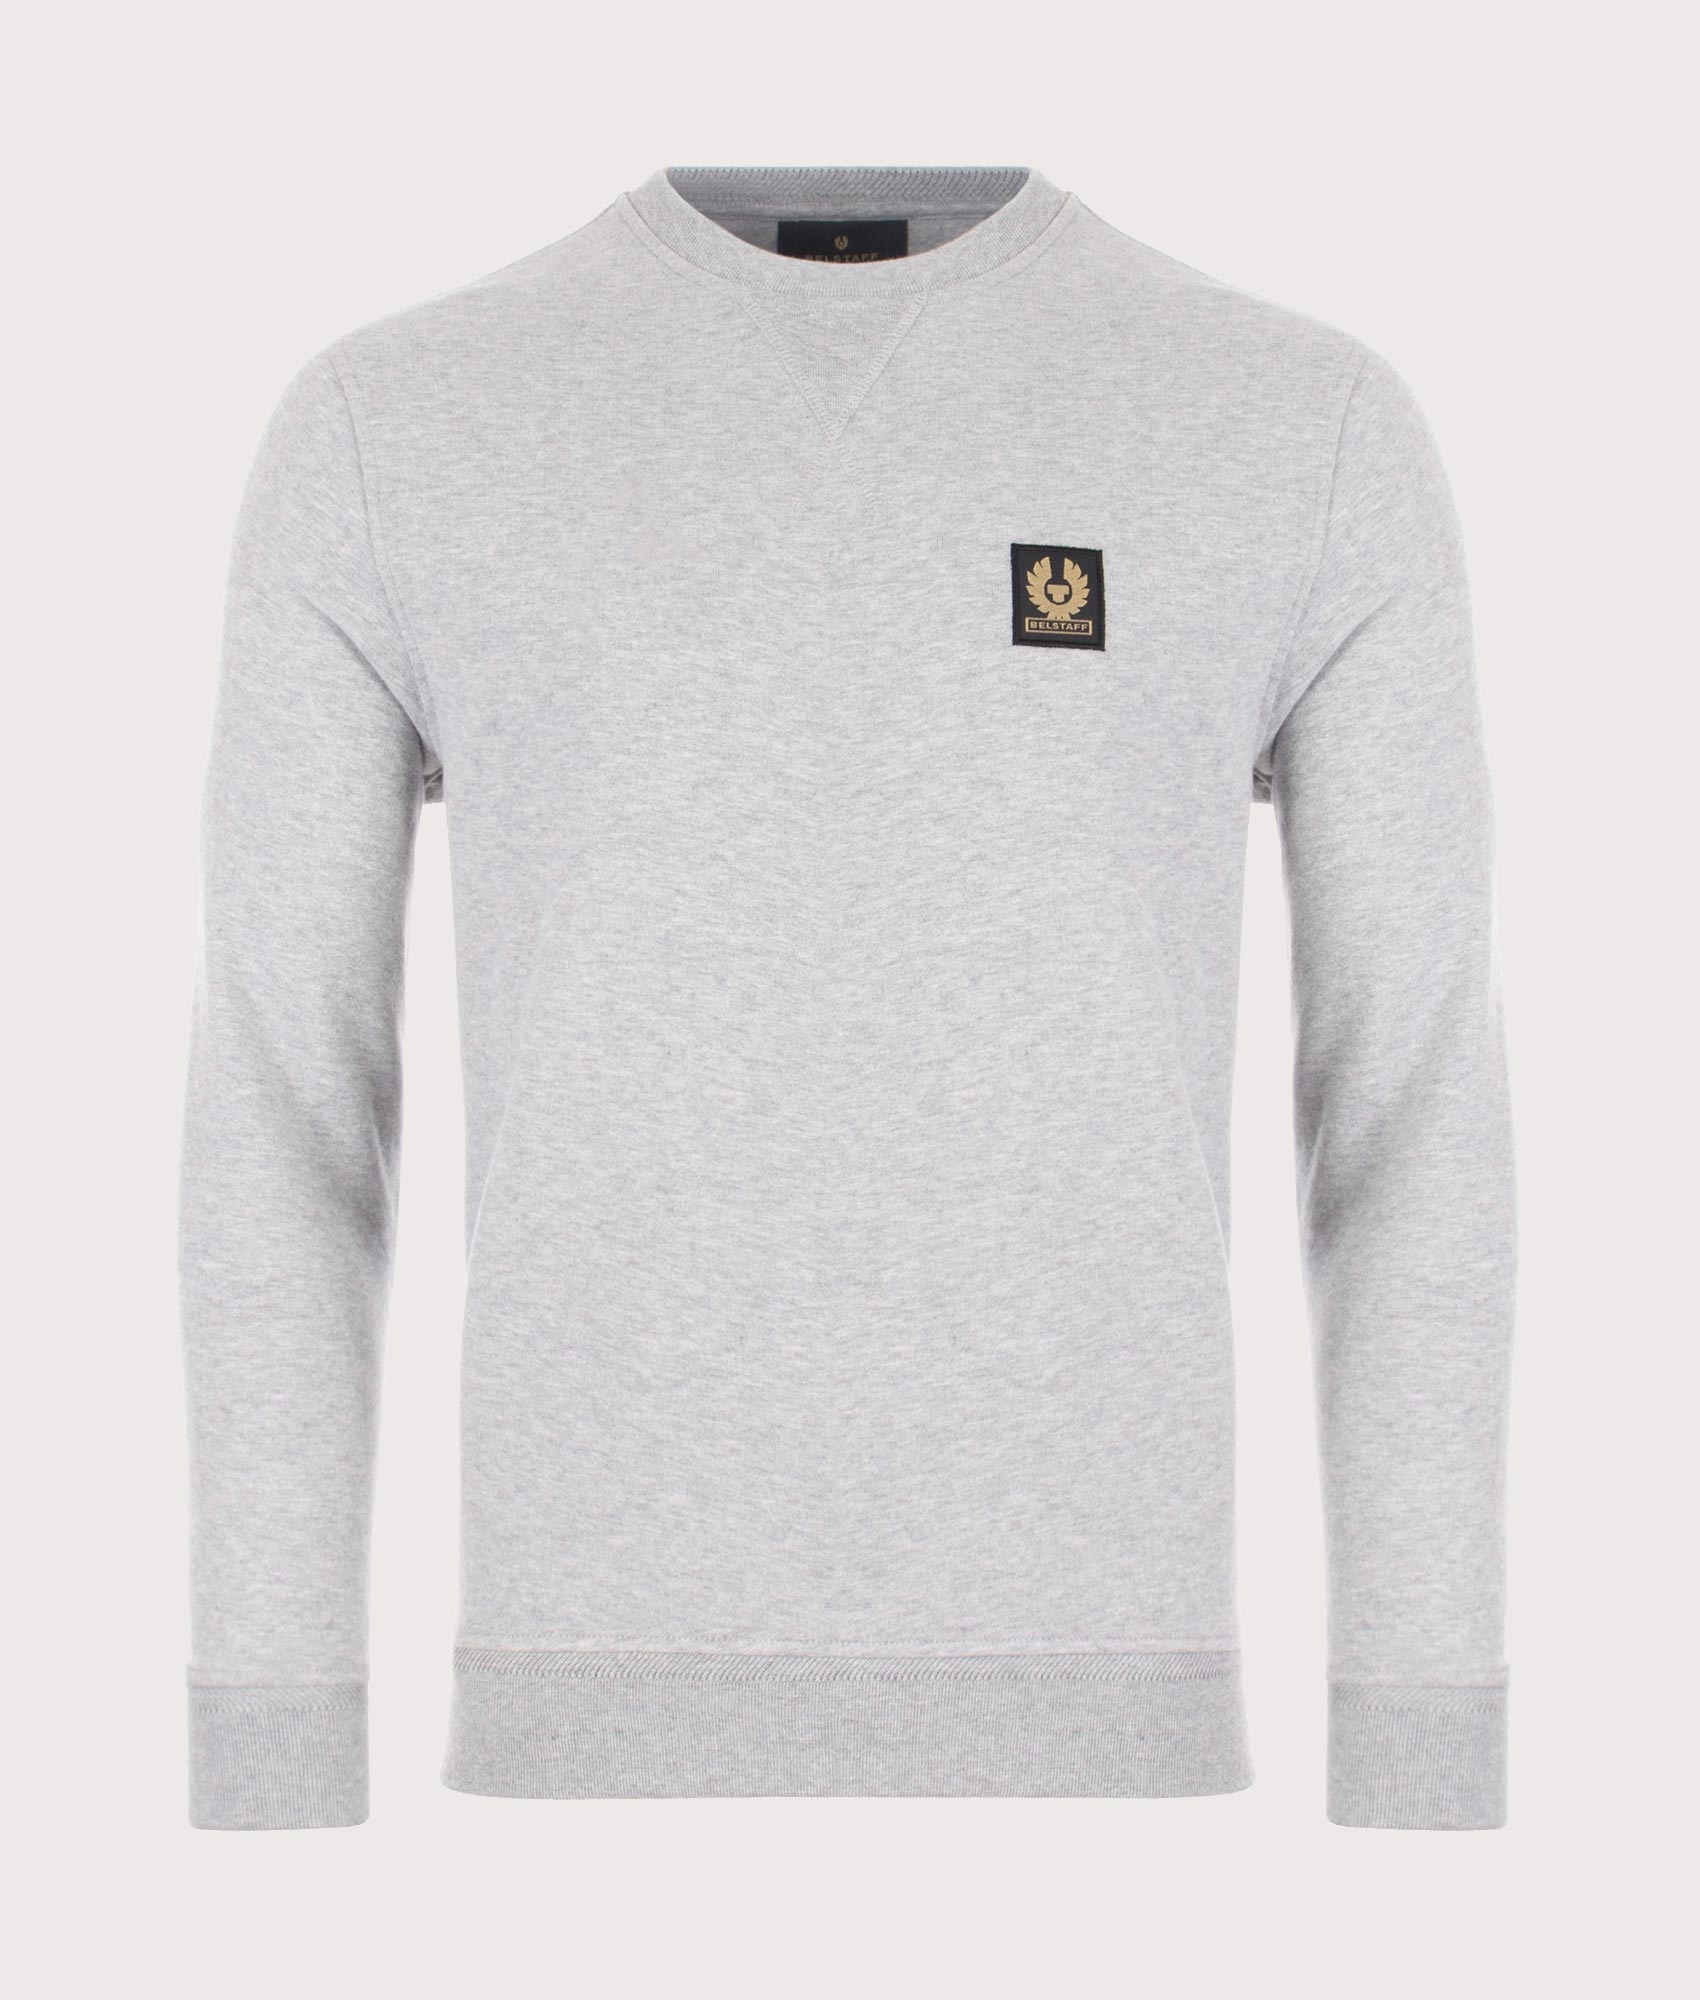 Belstaff Mens Belstaff Sweatshirt - Colour: 90015 Grey Melange - Size: Large